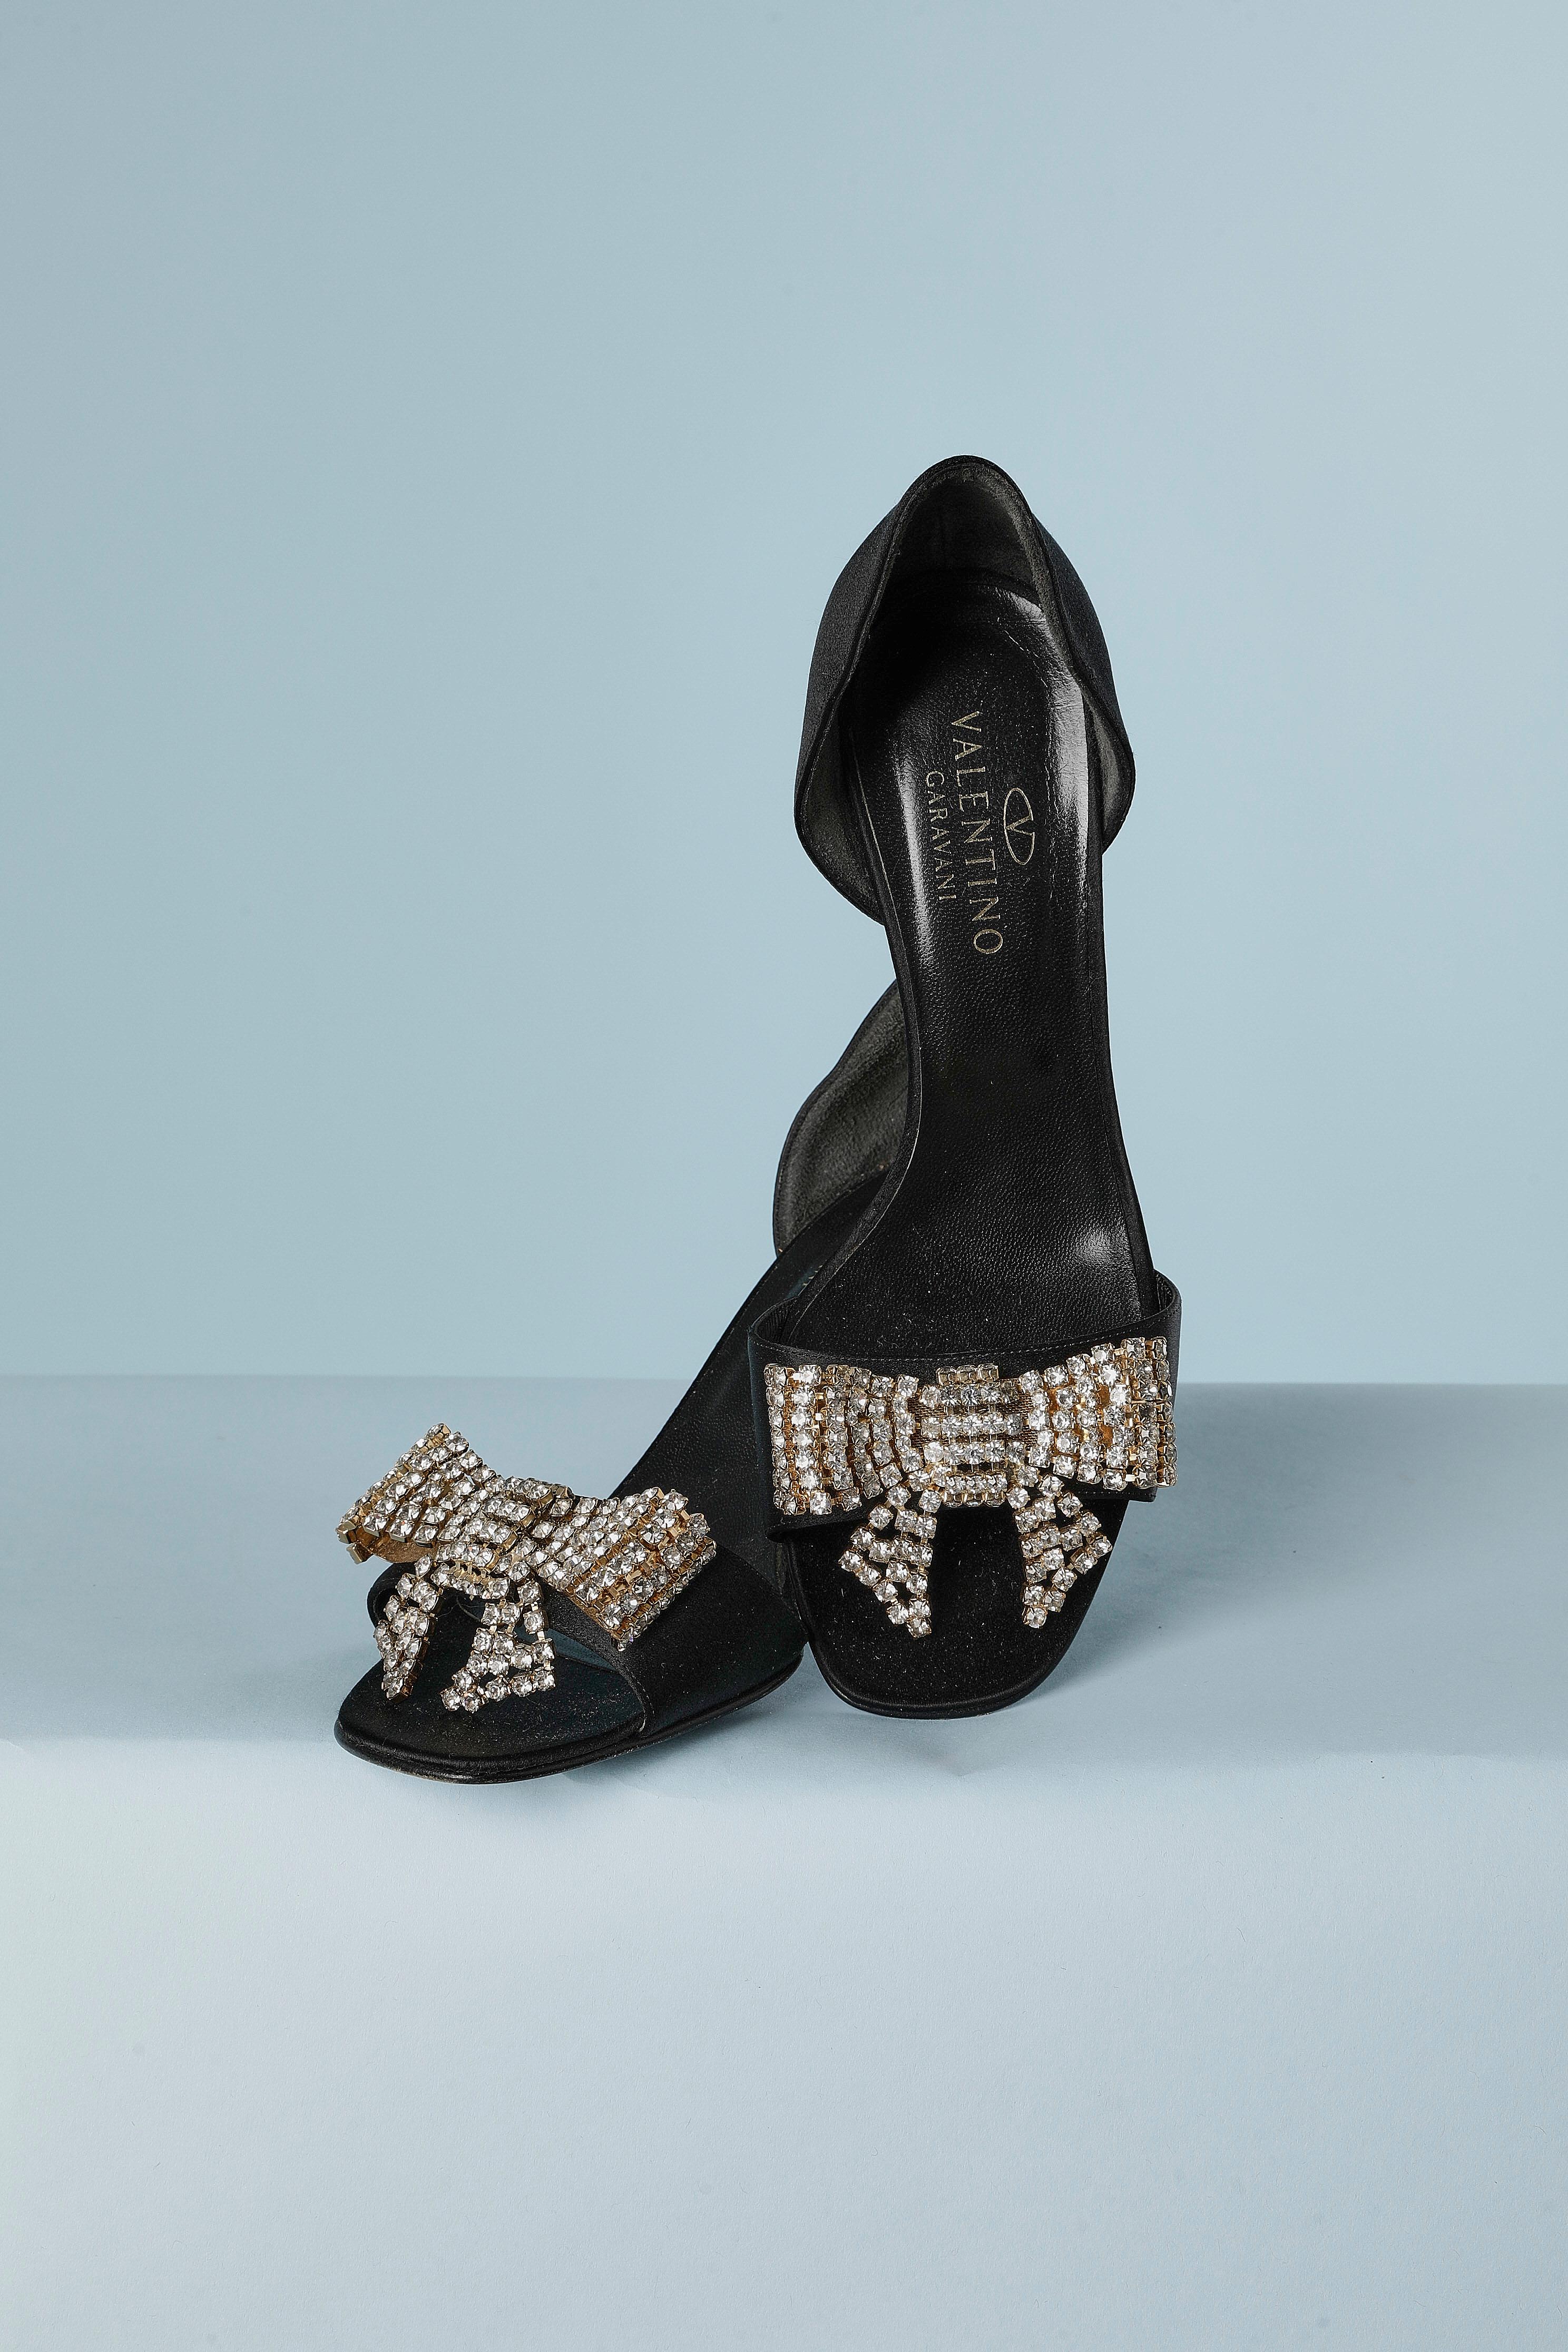 Black satin high heels sandals with rhinestone bow Valentino Garavani  For Sale 1